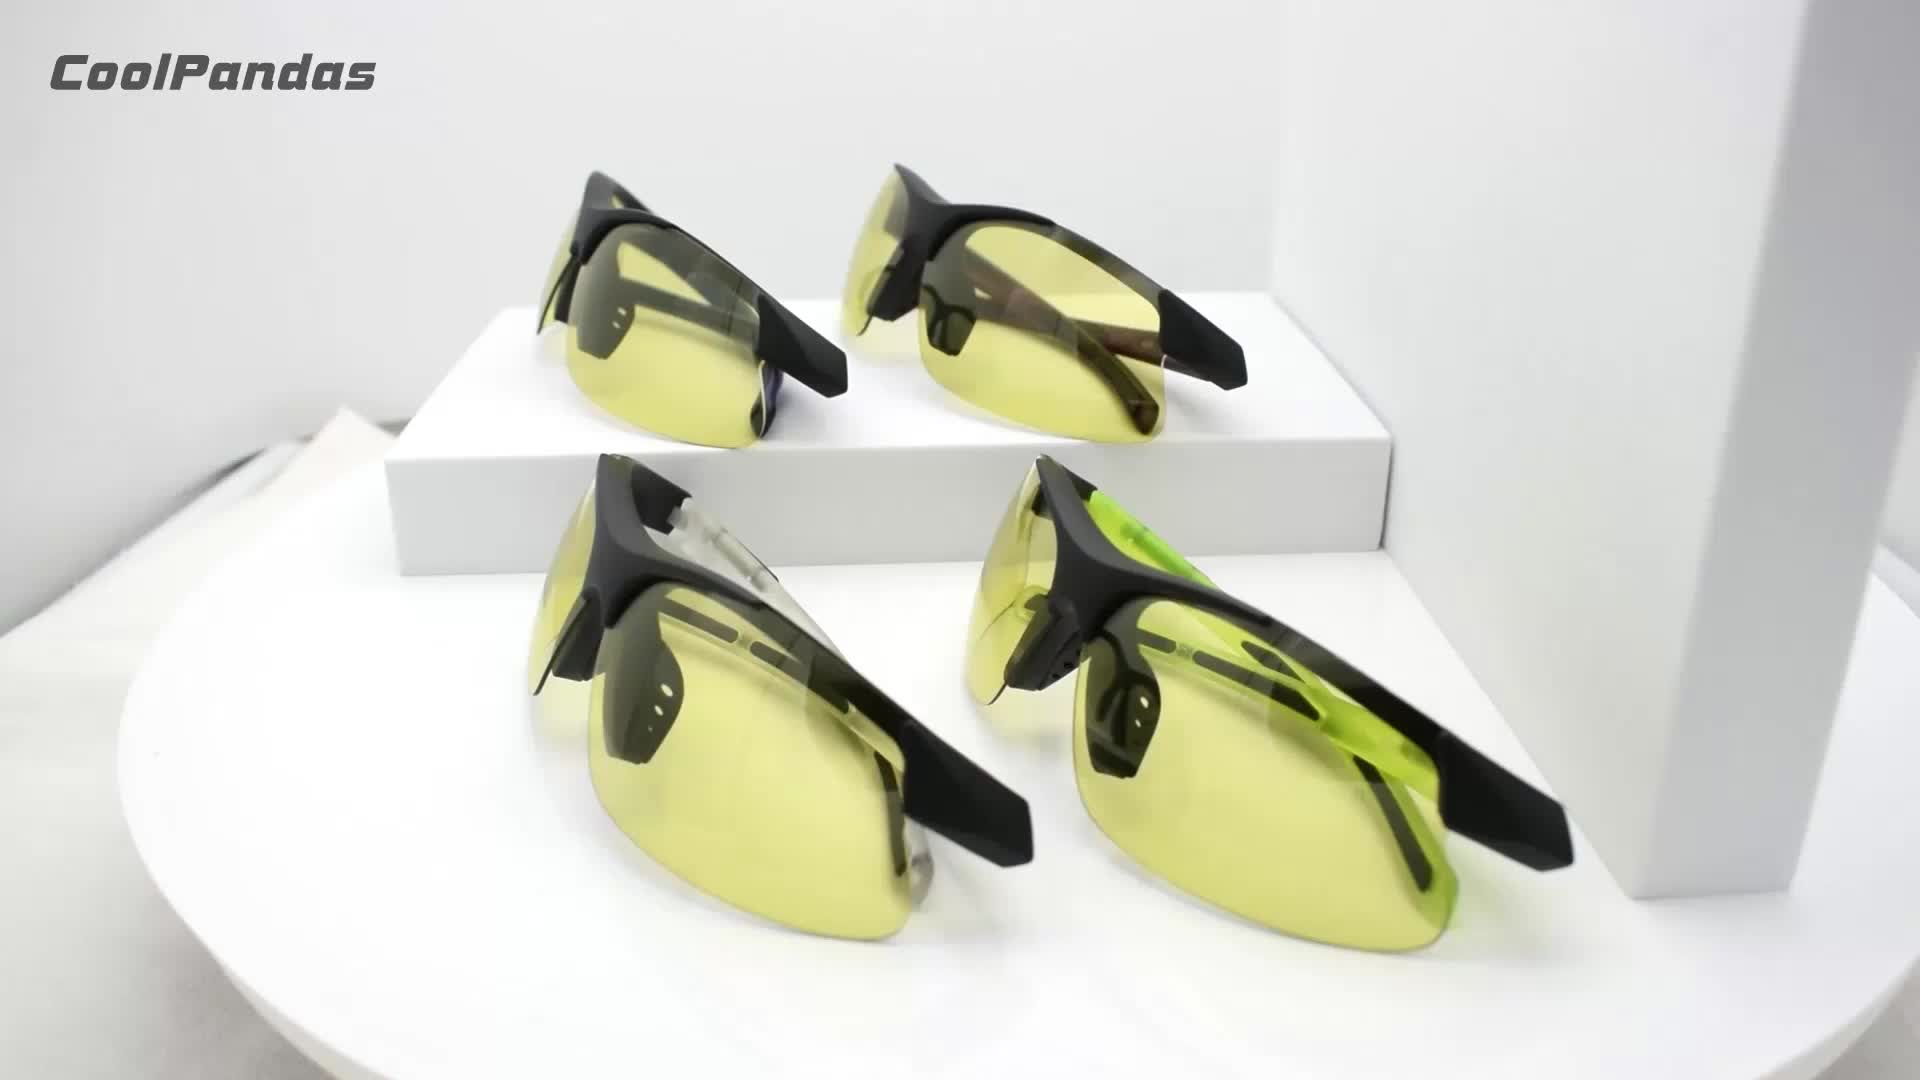 Luxury Brand Day Night Cycling Sunglasses Photochromic Men Women Bicycle  Glasses Polarized Driving Fishing Eyewear Bike Goggles, High-quality &  Affordable